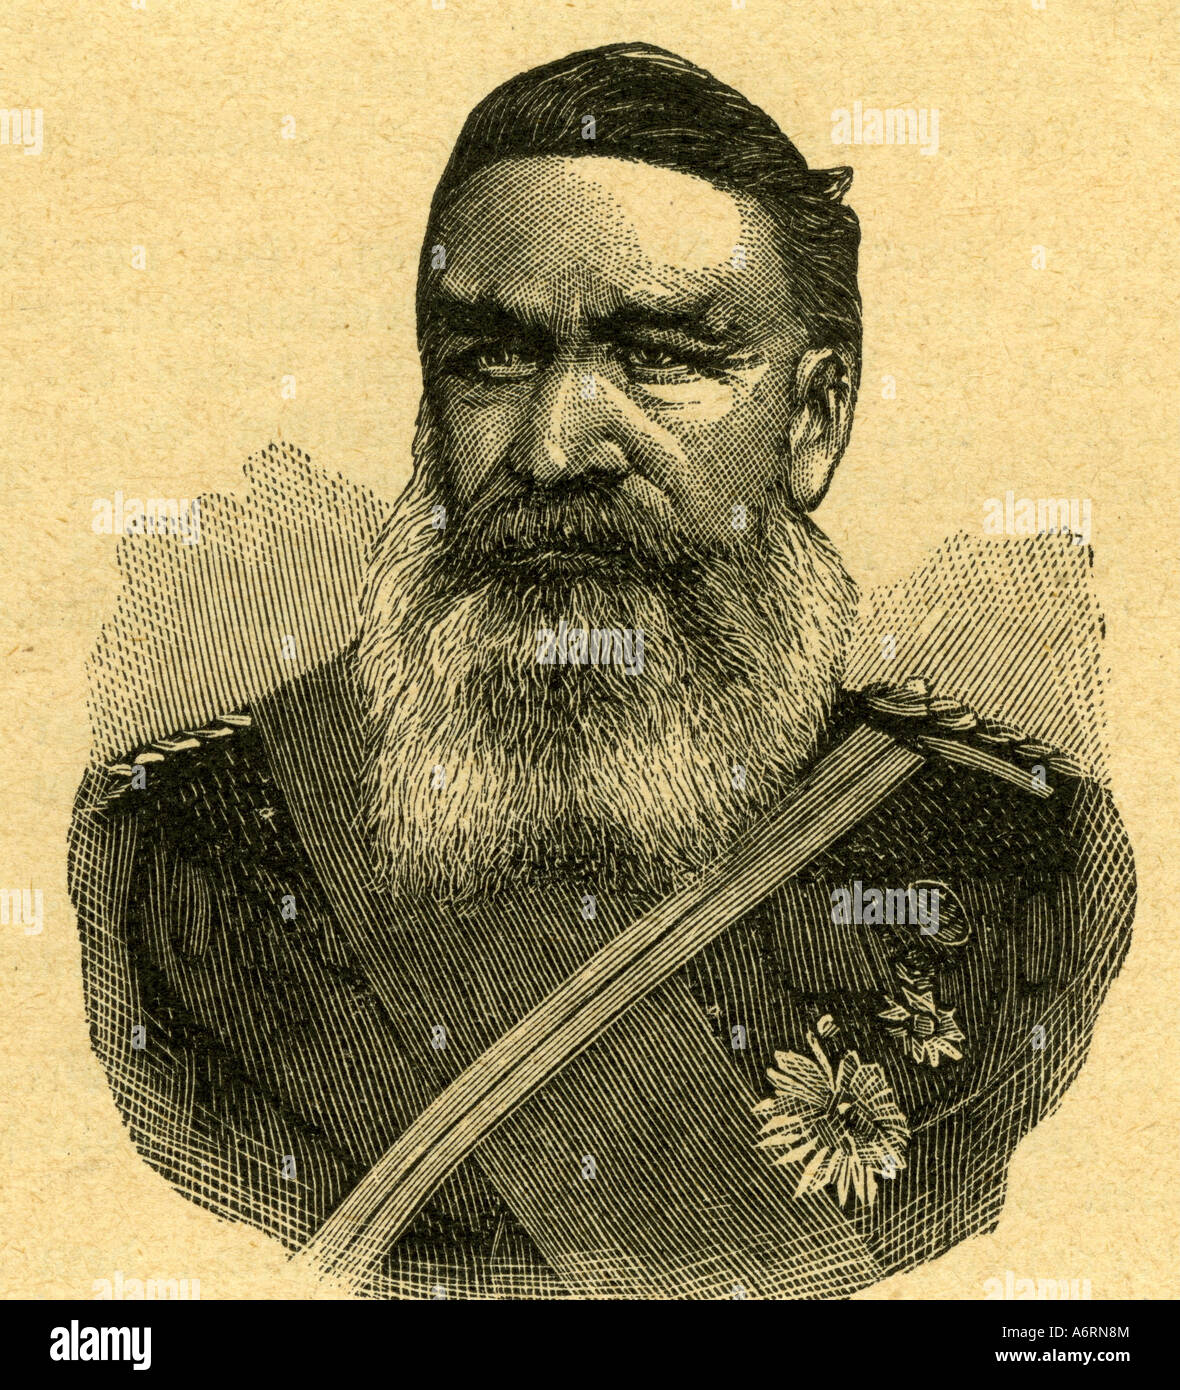 'Joubert, Petrus Jacobus 'Piet', 1834 - 1900, Boer general, portrait, engraving, 19th century, Boer War 1899 - 1902, commandan Stock Photo